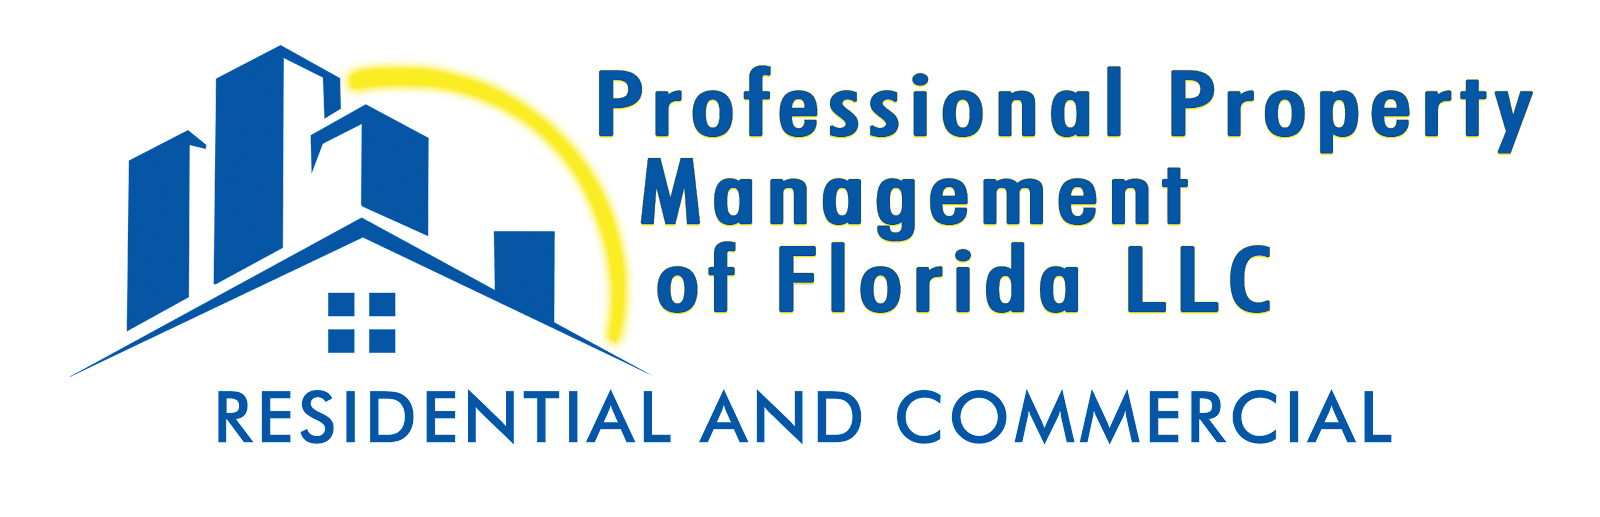 Professional Property Management of Florida LLC